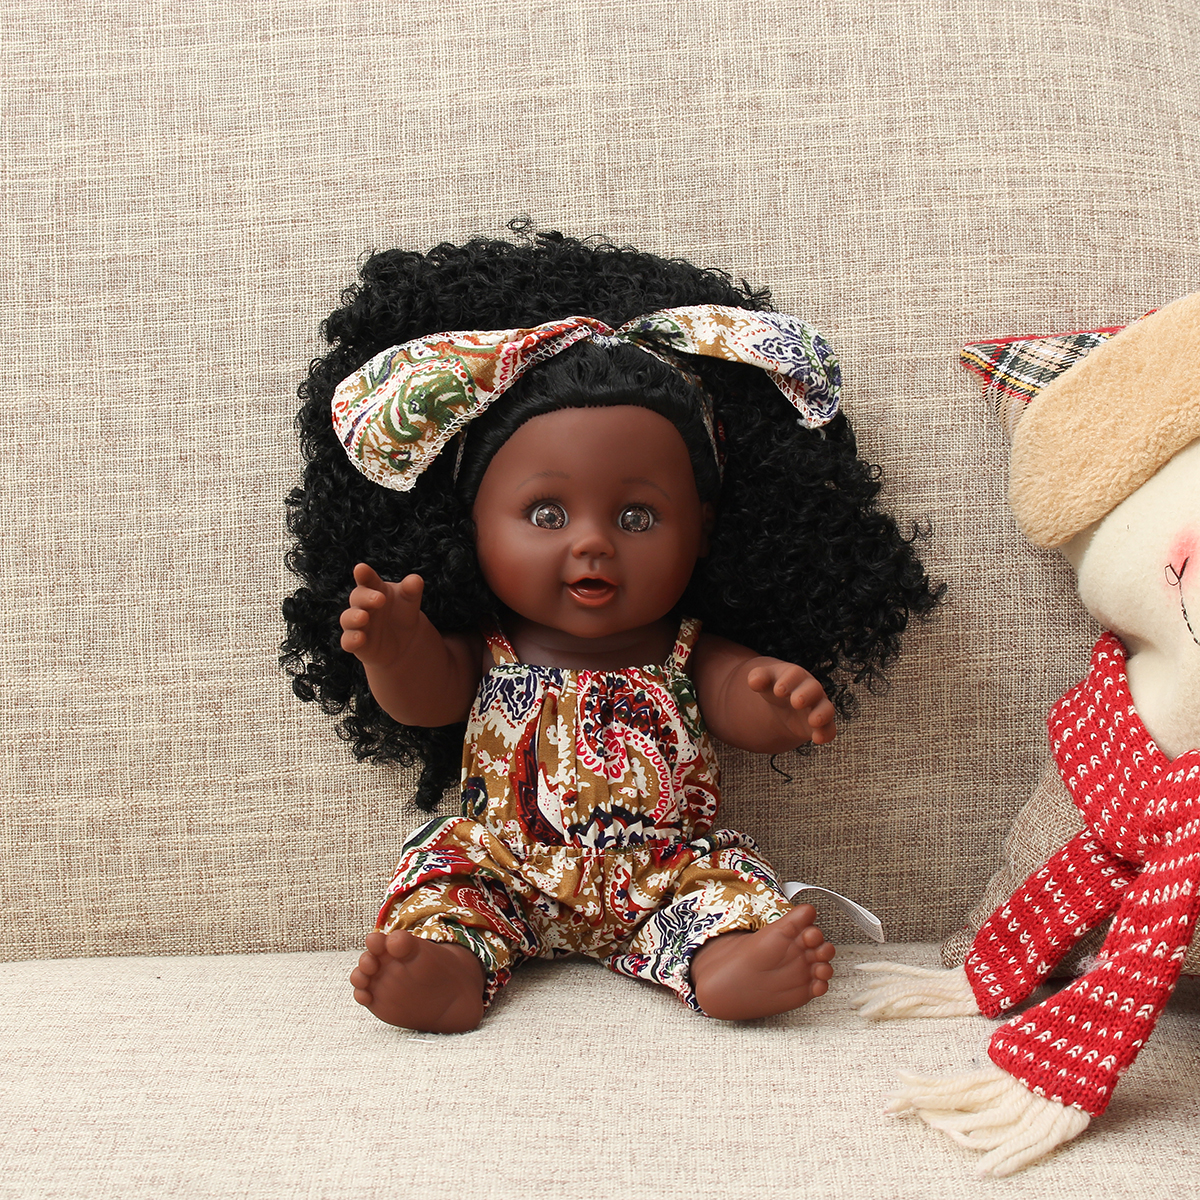 30CM-Silicone-Vinyl-African-Girl-Realistic-Reborn-Lifelike-Newborn-Baby-Doll-Toy-with-360deg-Moveabl-1817562-8